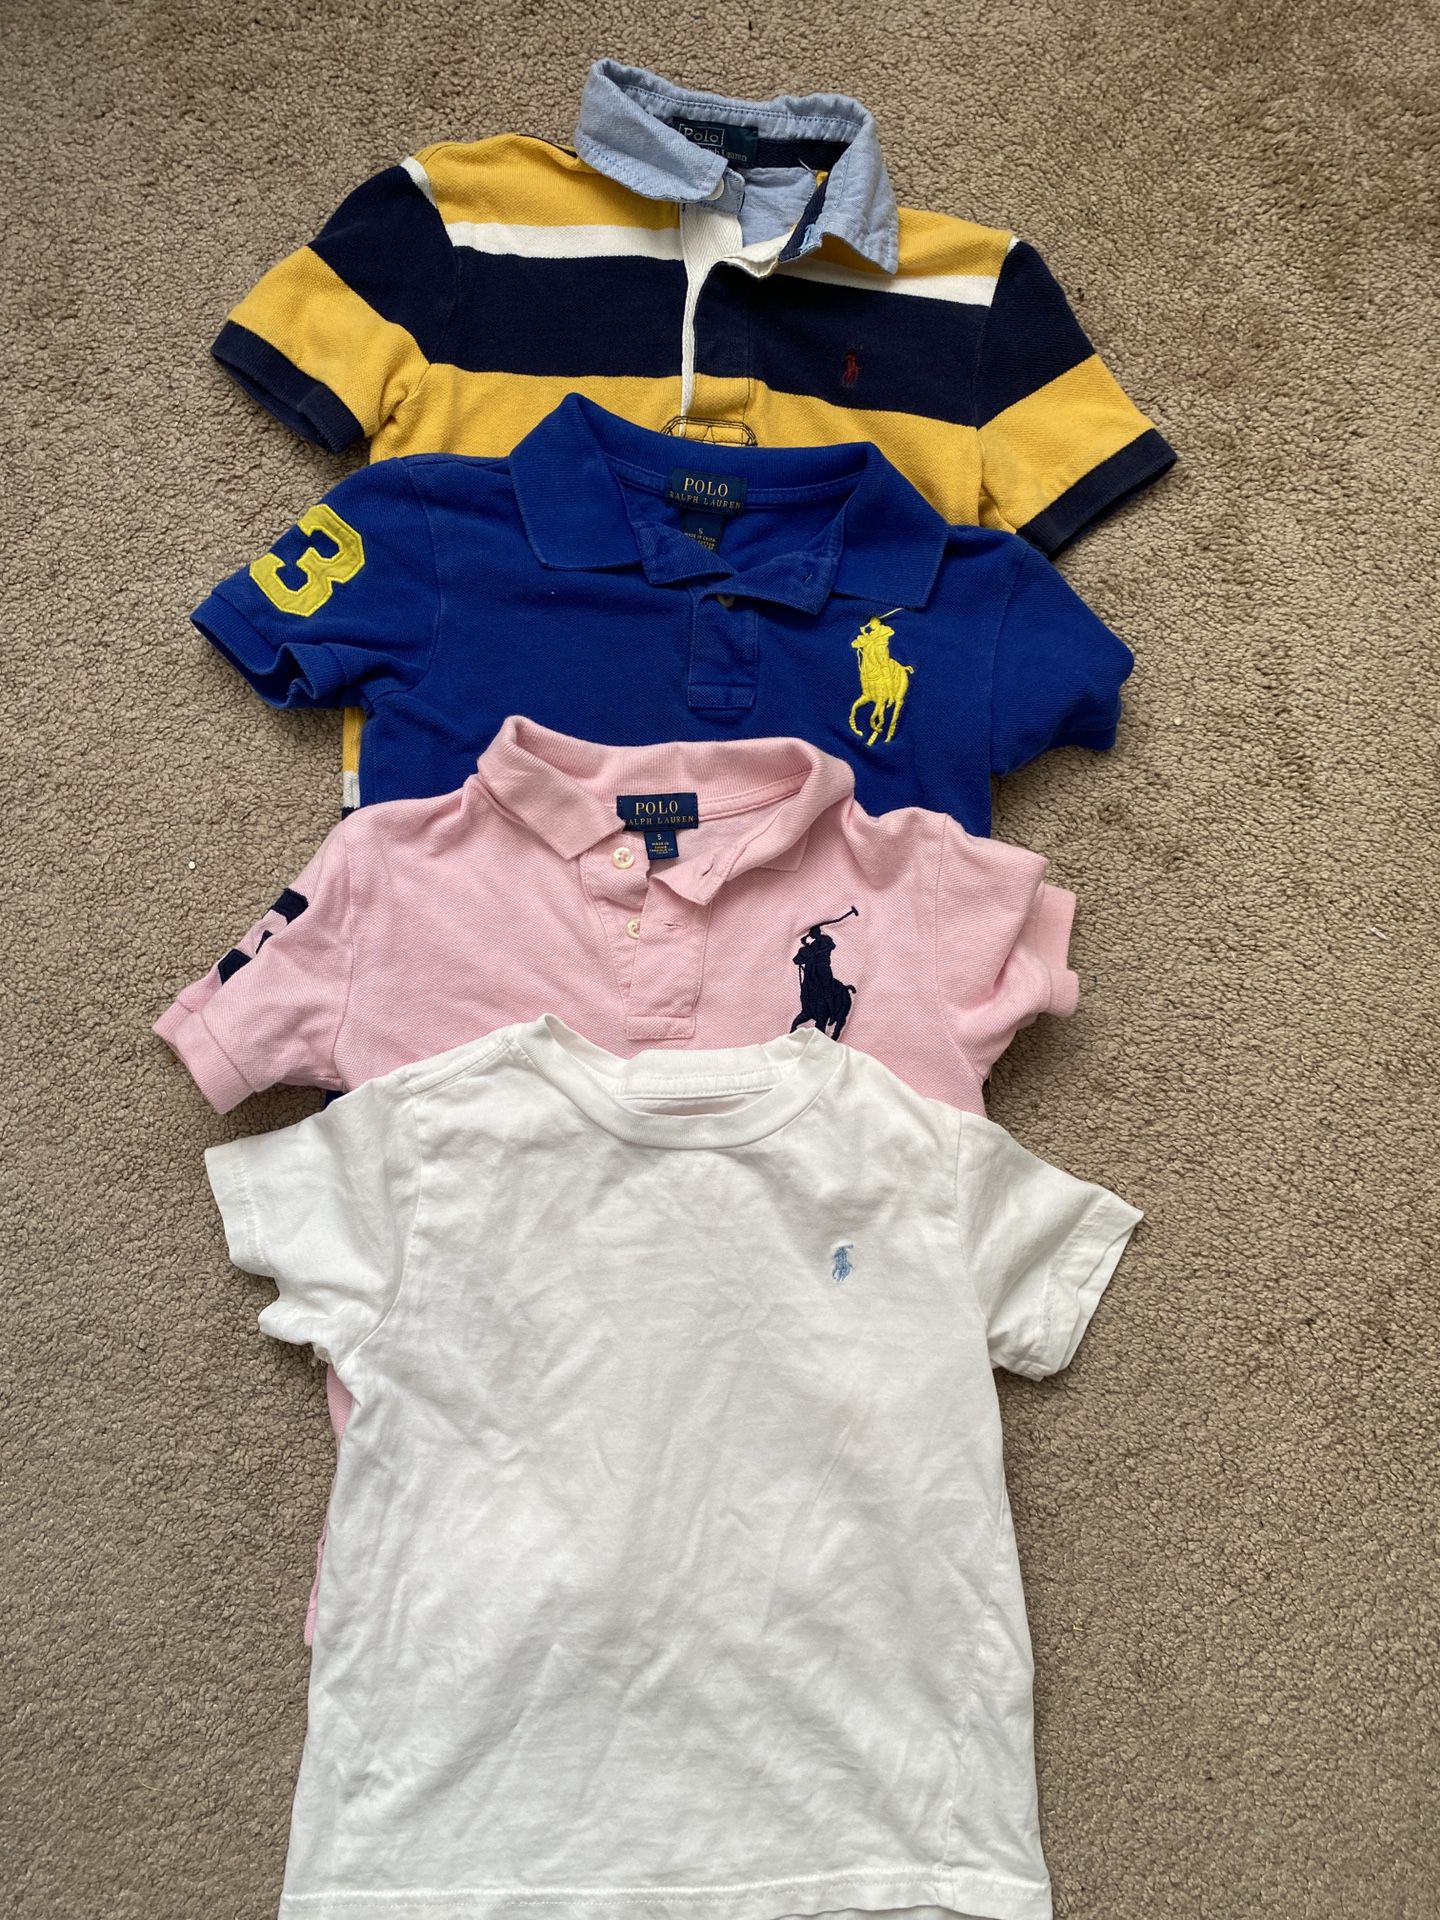 Ralph Lauren Polo 5T Bundle Boys Shirts